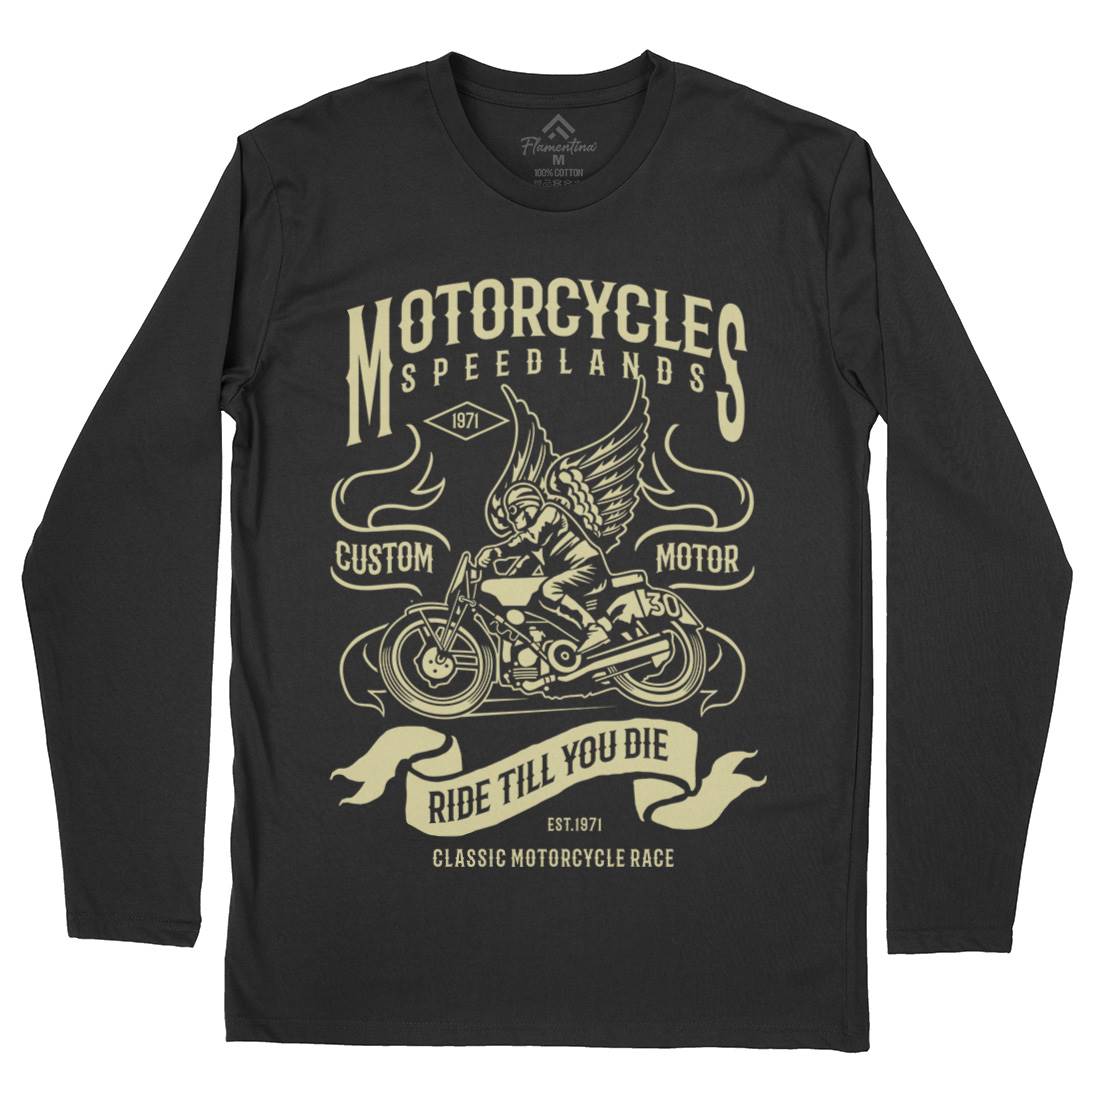 Speed Lands Mens Long Sleeve T-Shirt Motorcycles B232